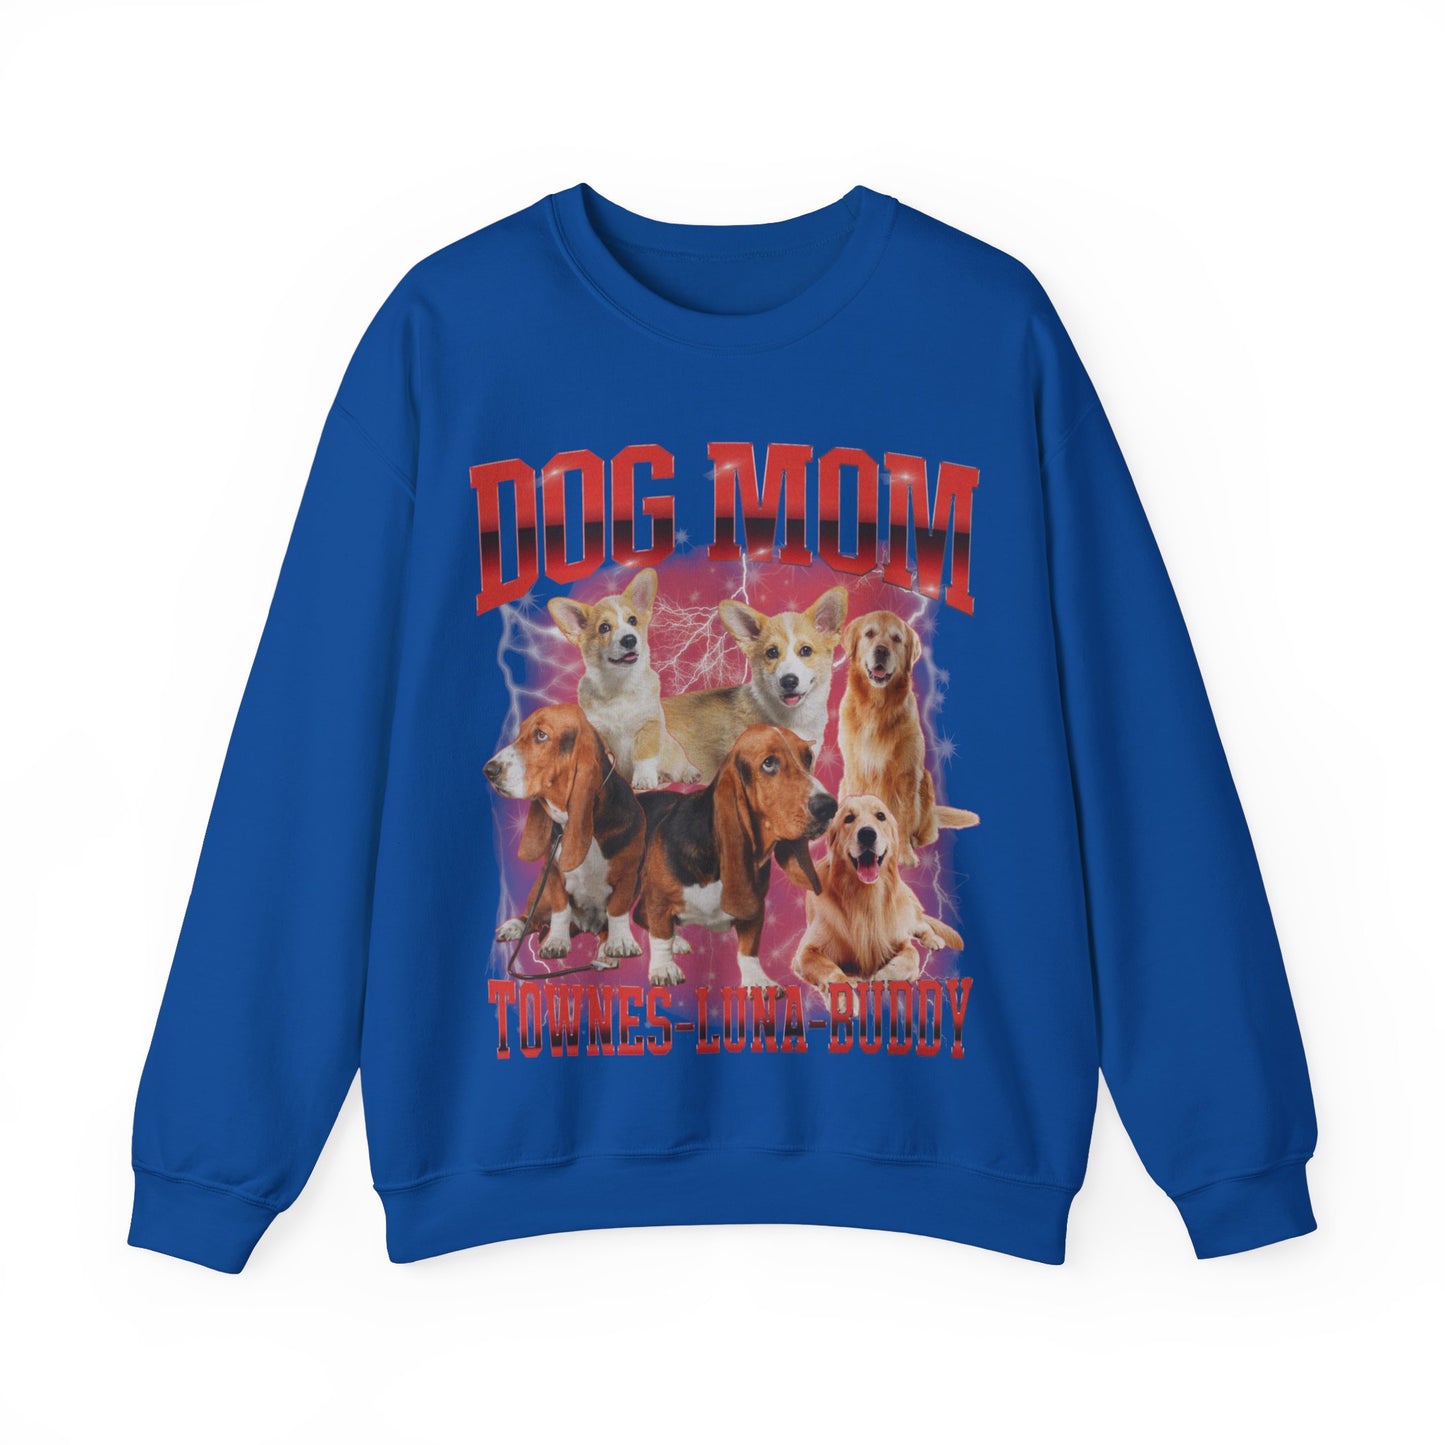 Custom Retro Dog Bootleg Sweatshirt, Dog Mom Sweatshirt, Dog Bootleg Retro 90's Sweatshirt, Custom Pet Photo, Custom Pet Portrait, S1430